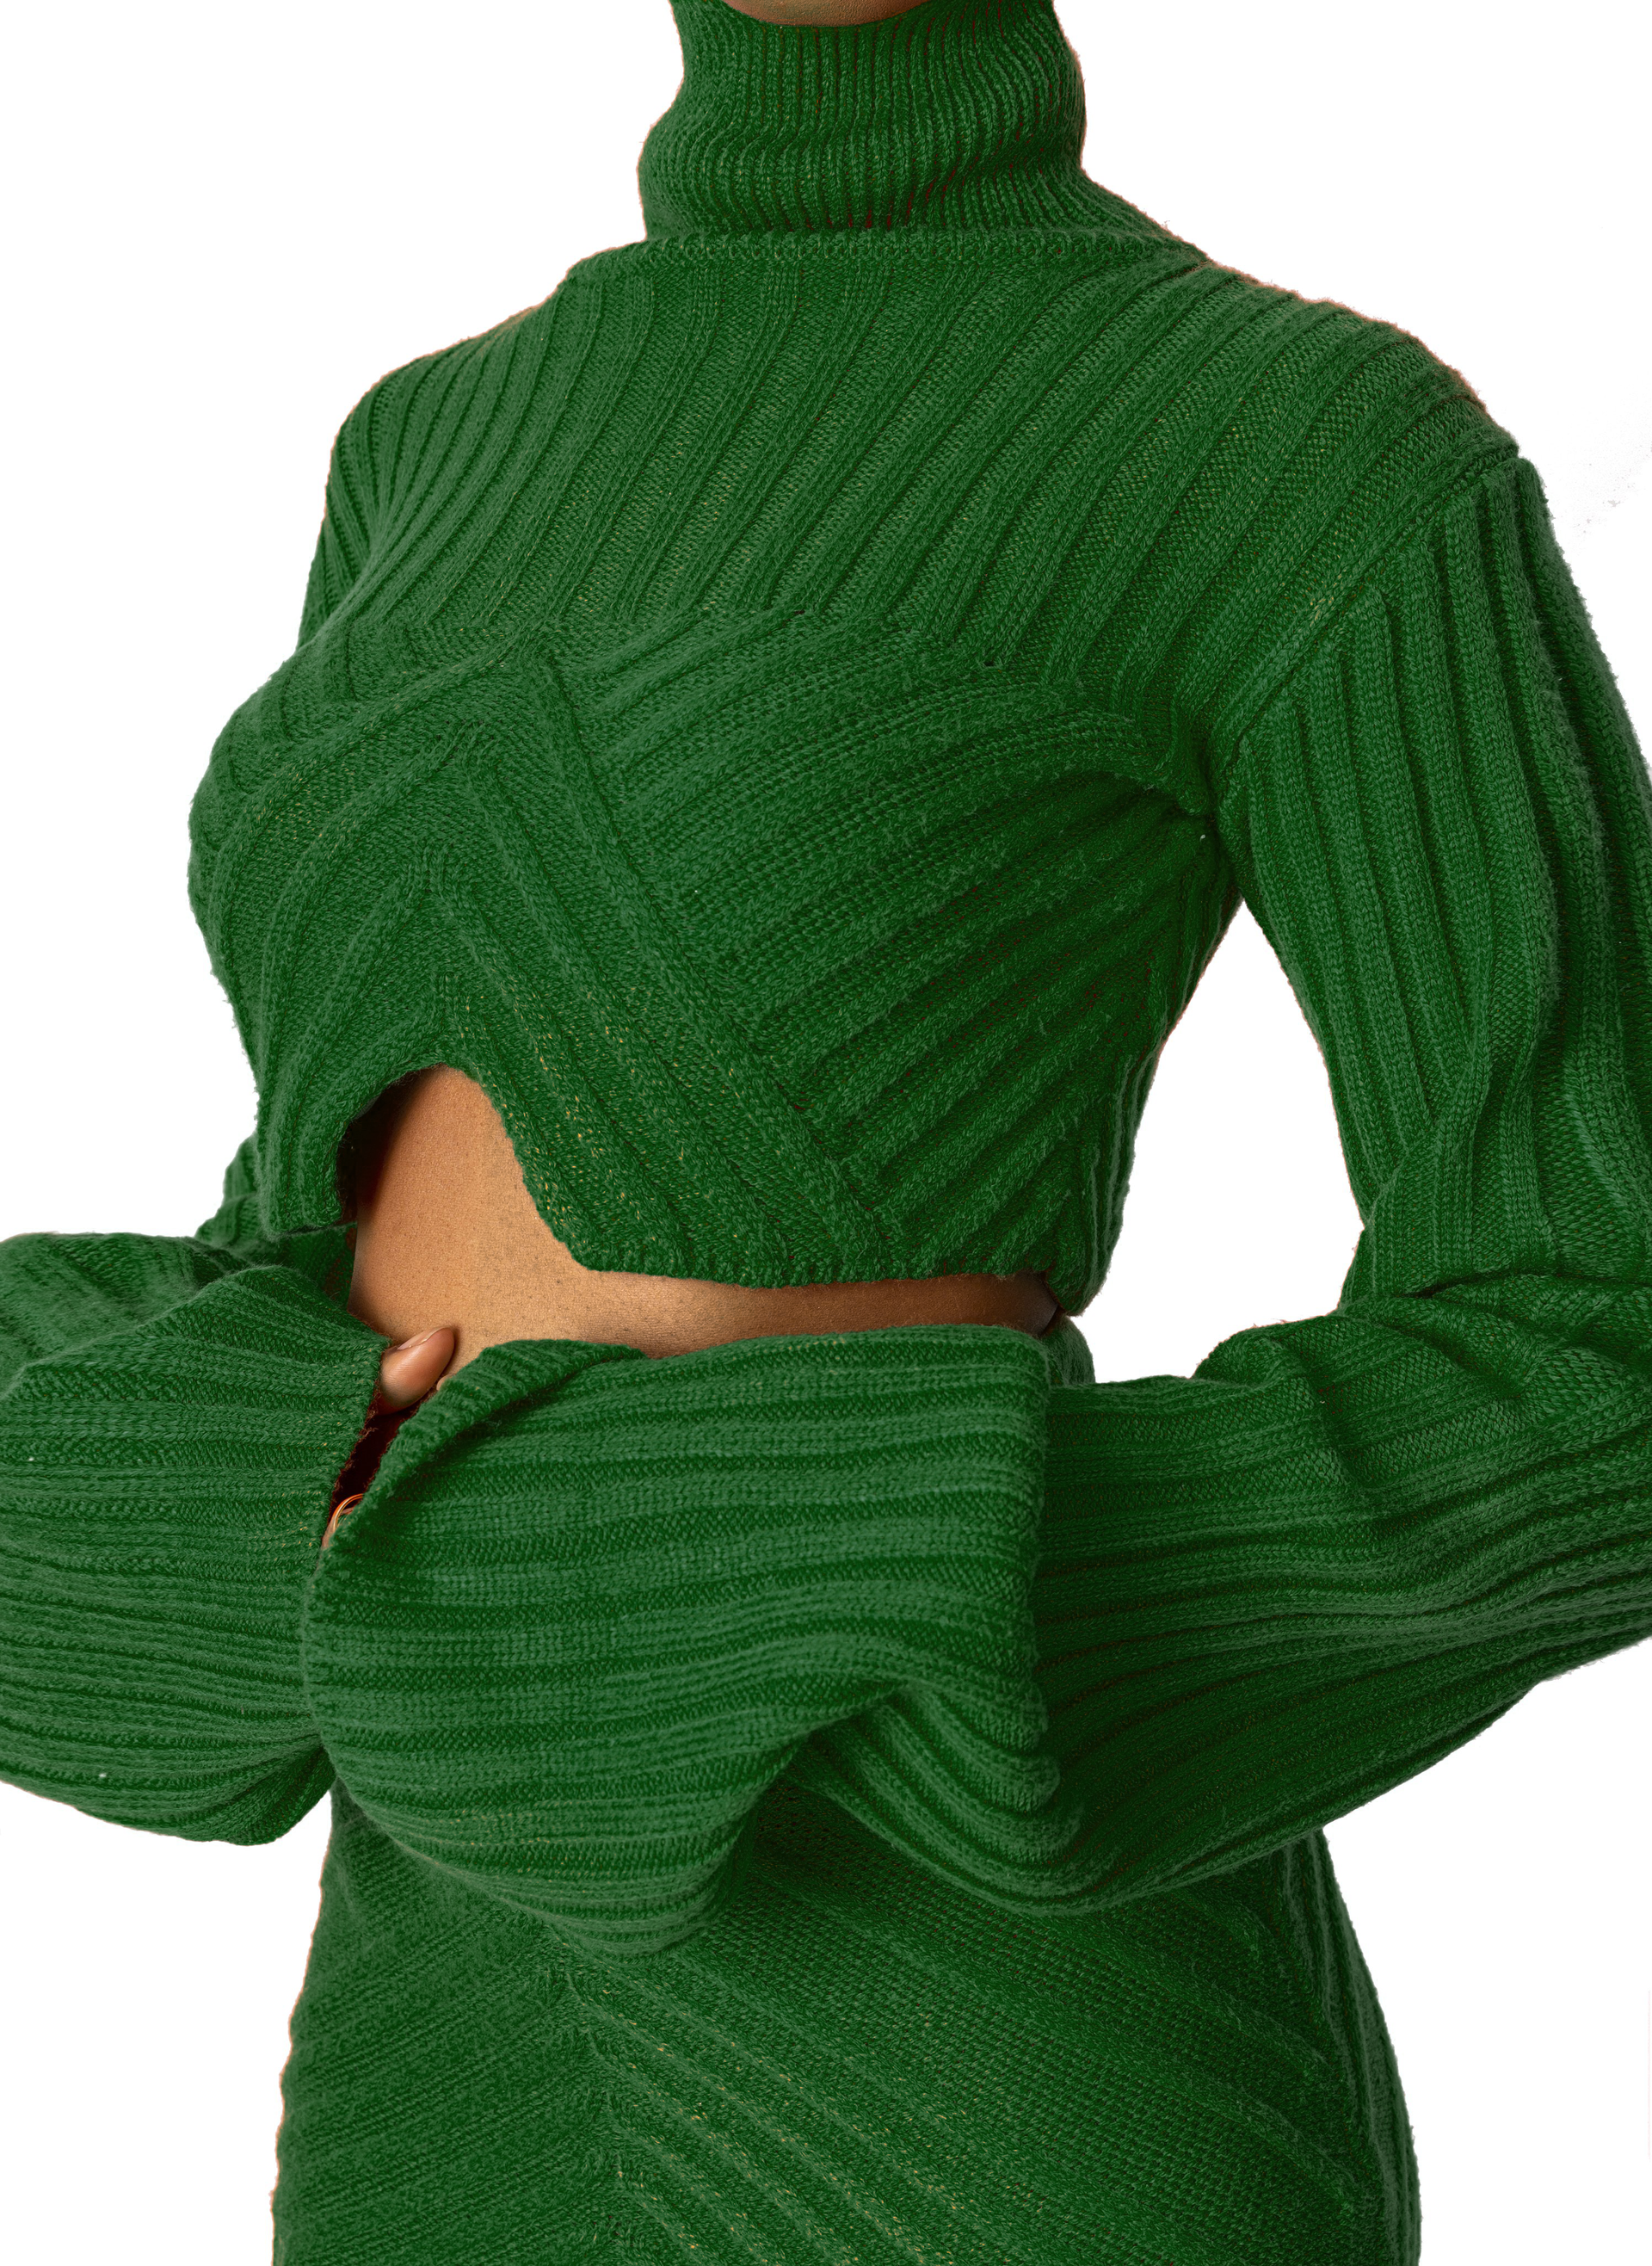 A model wearing the Sia Crop Sweater